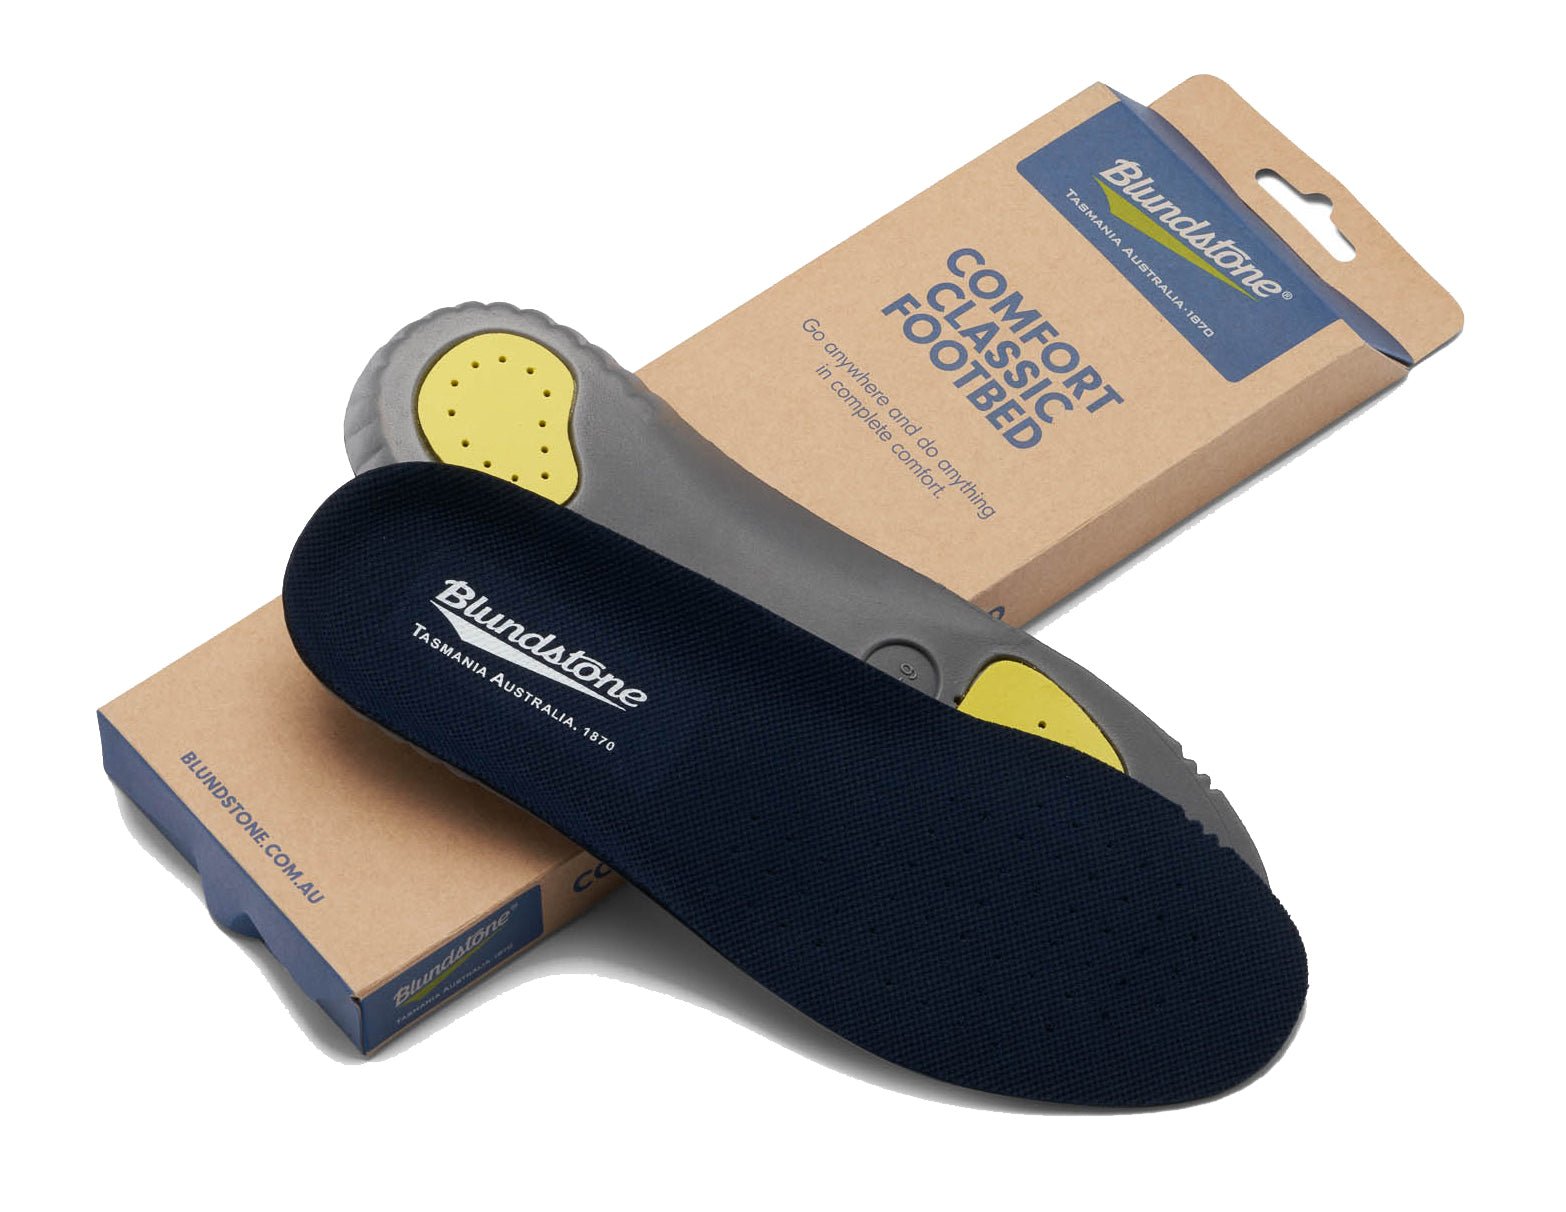 Blundstone Comfort Classic Footbed - Grady’s Feet Essentials - Blundstone